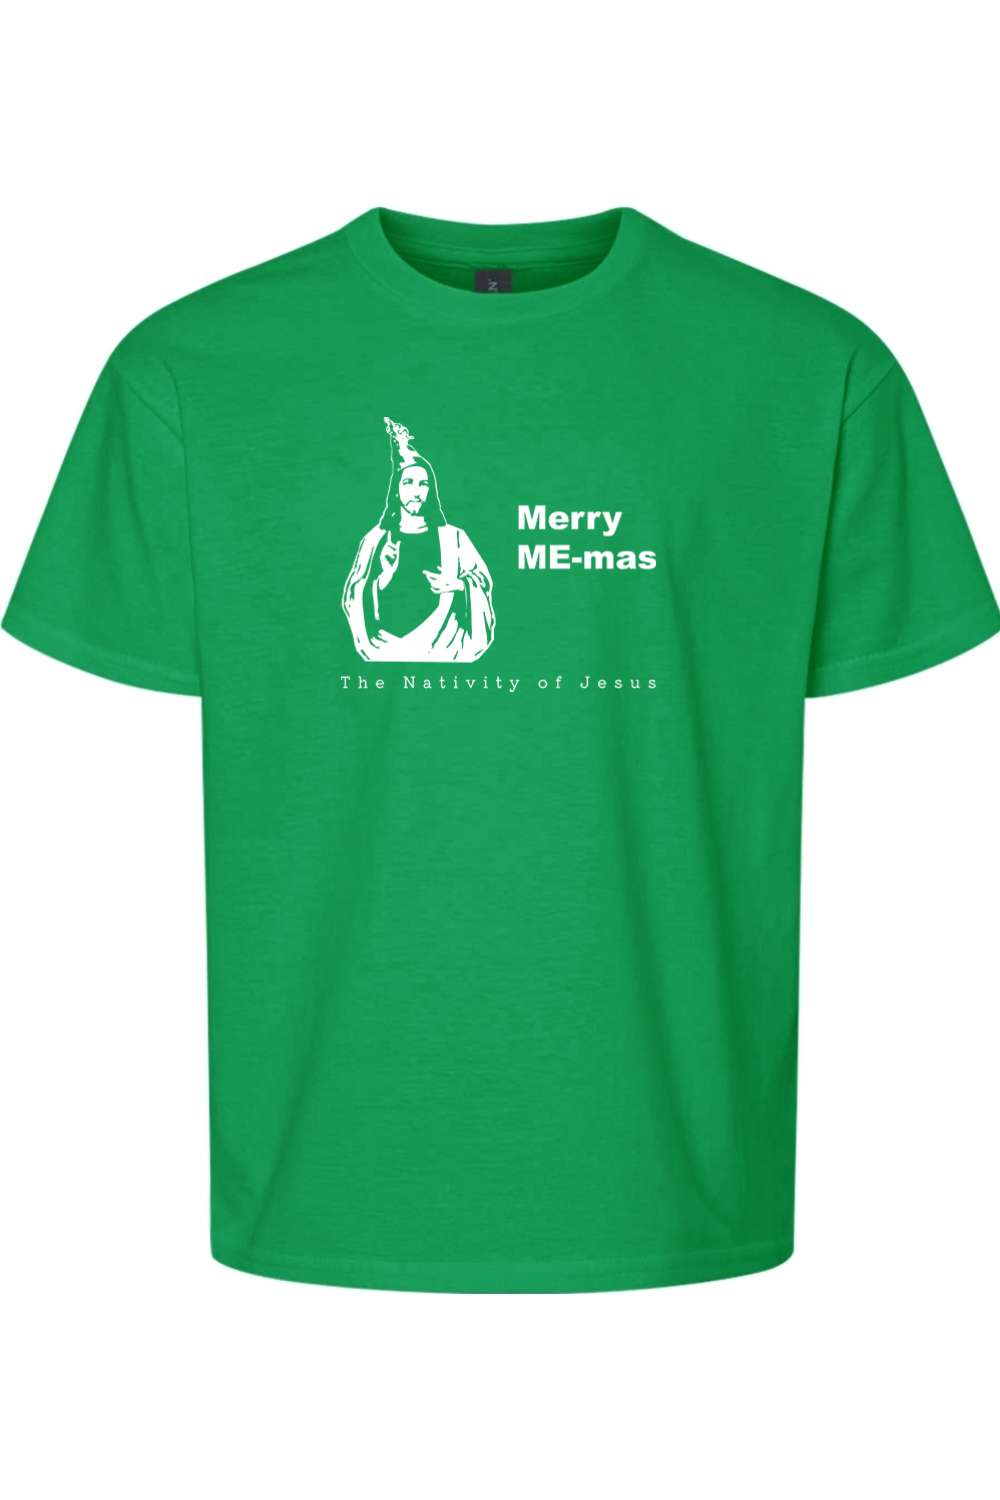 Merry ME-mas - The Nativity of Jesus Youth T-Shirt